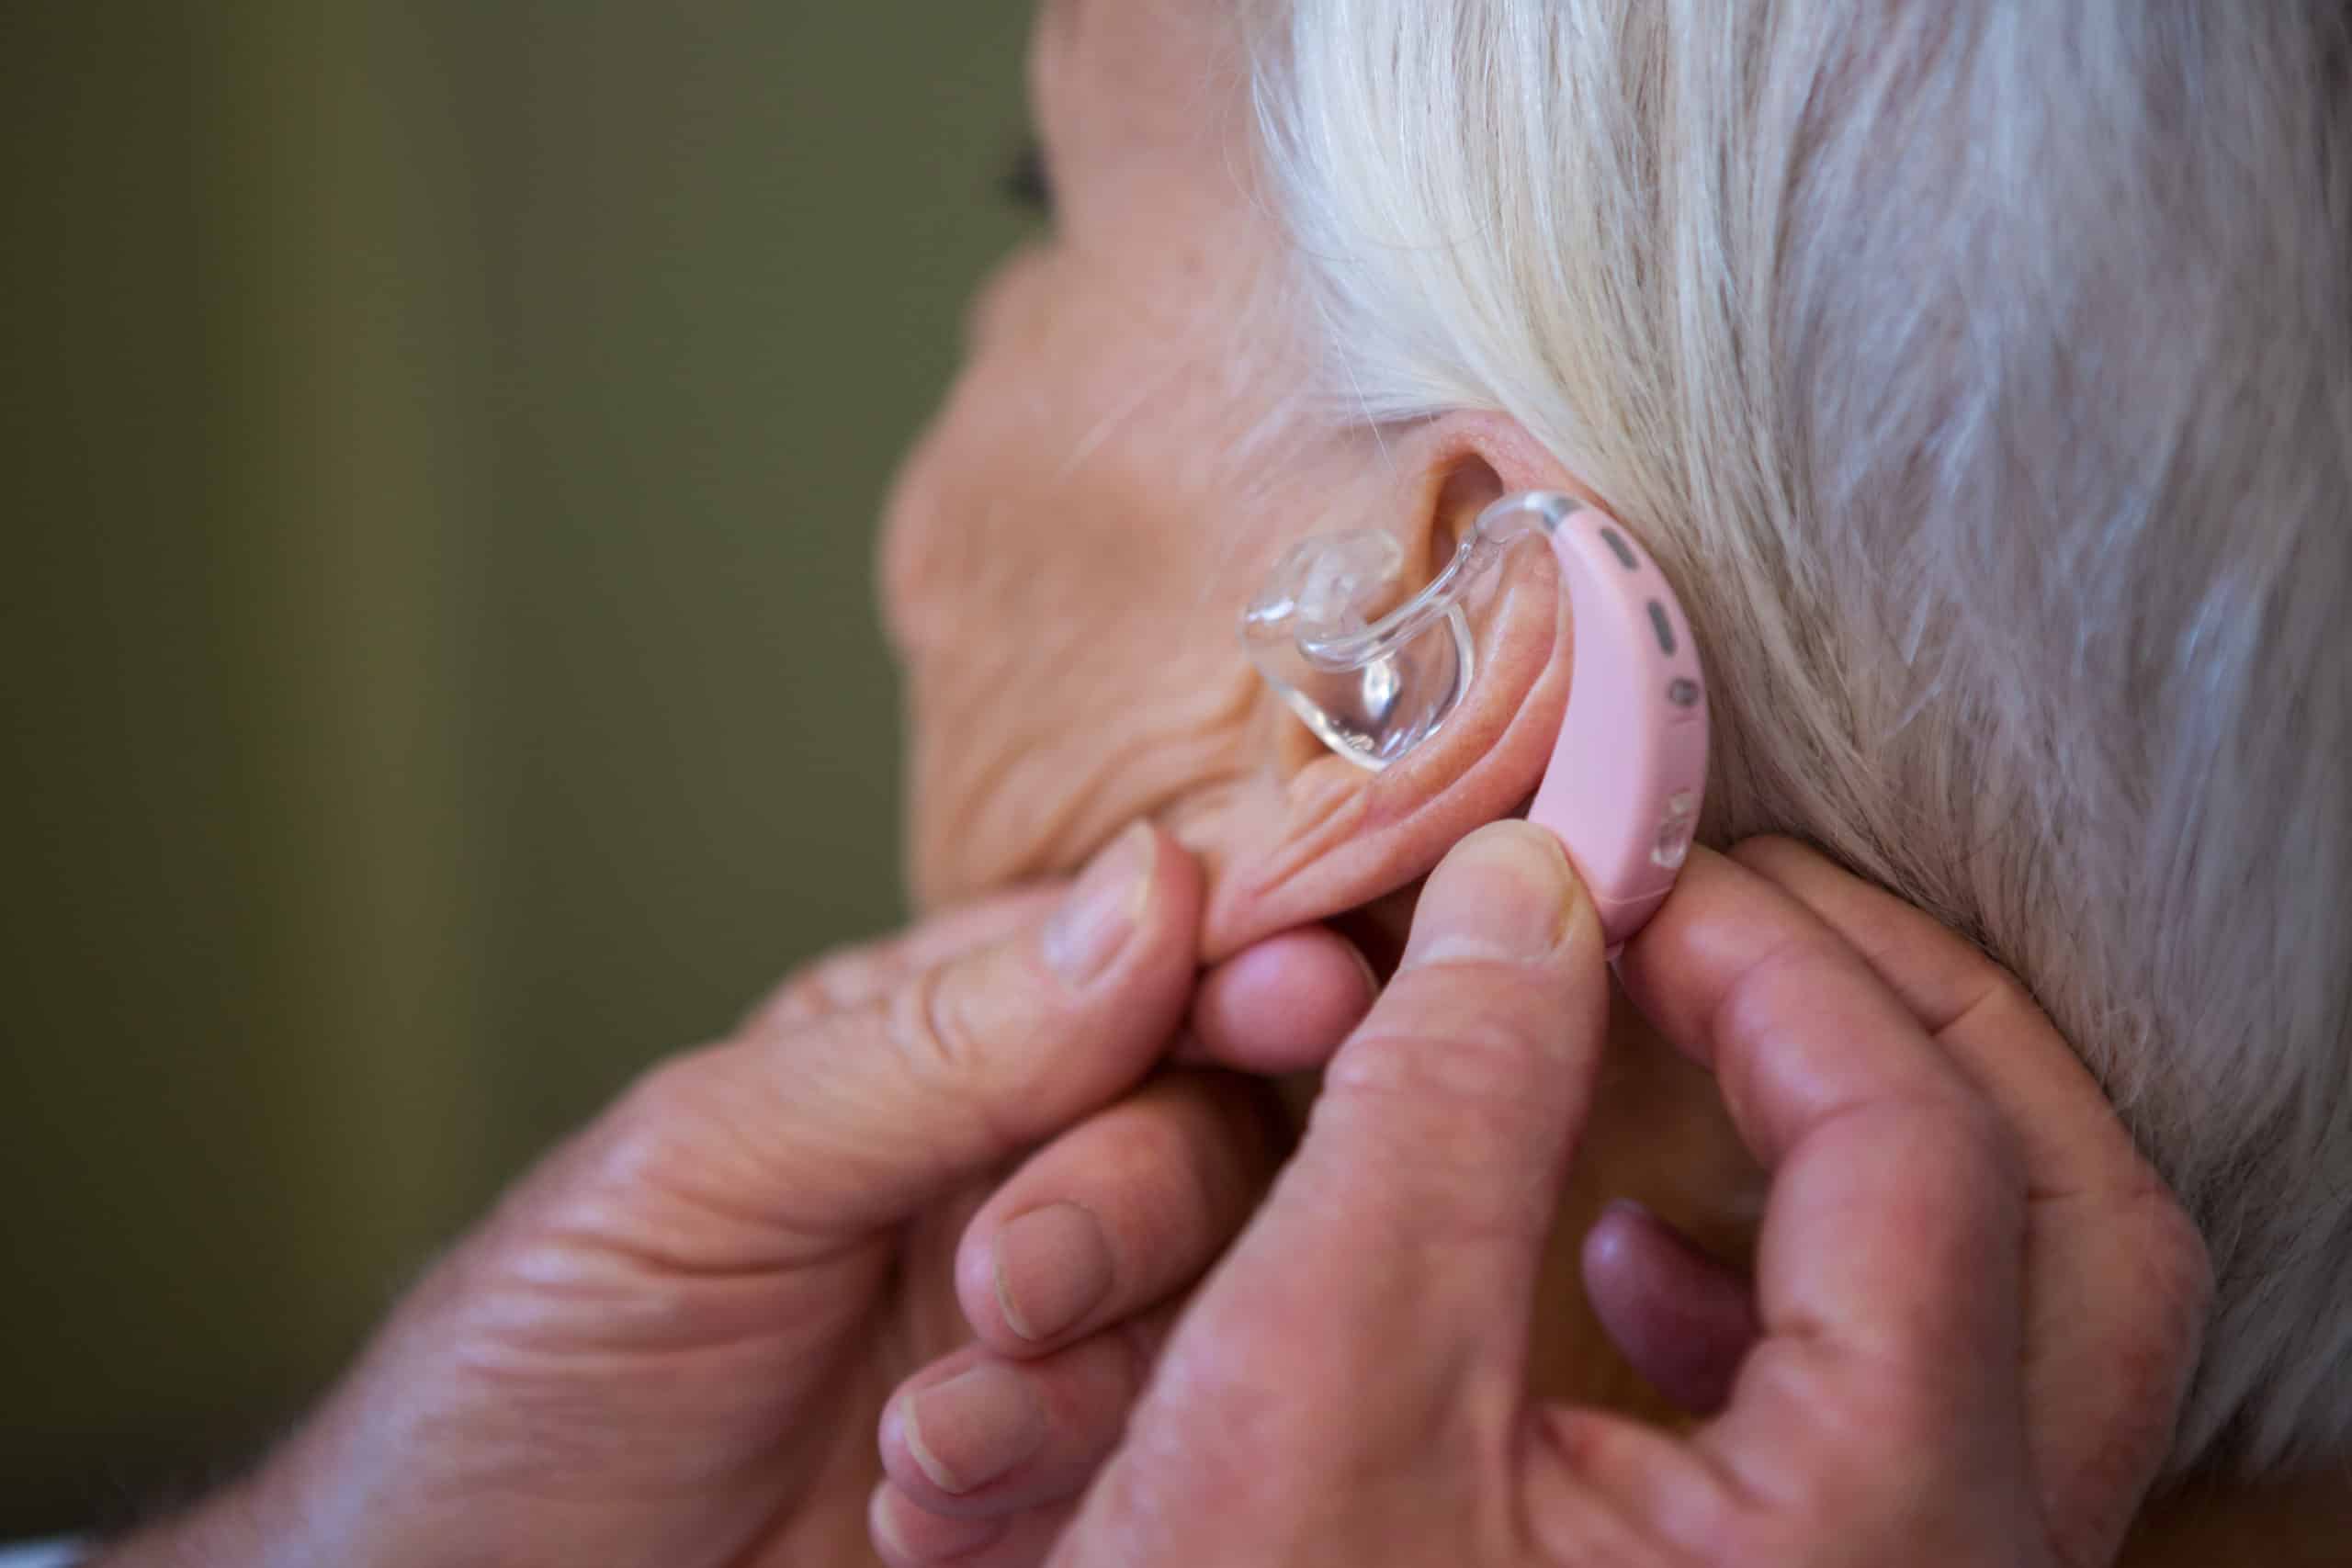 Can Hearing Aids Help Prevent Dementia?